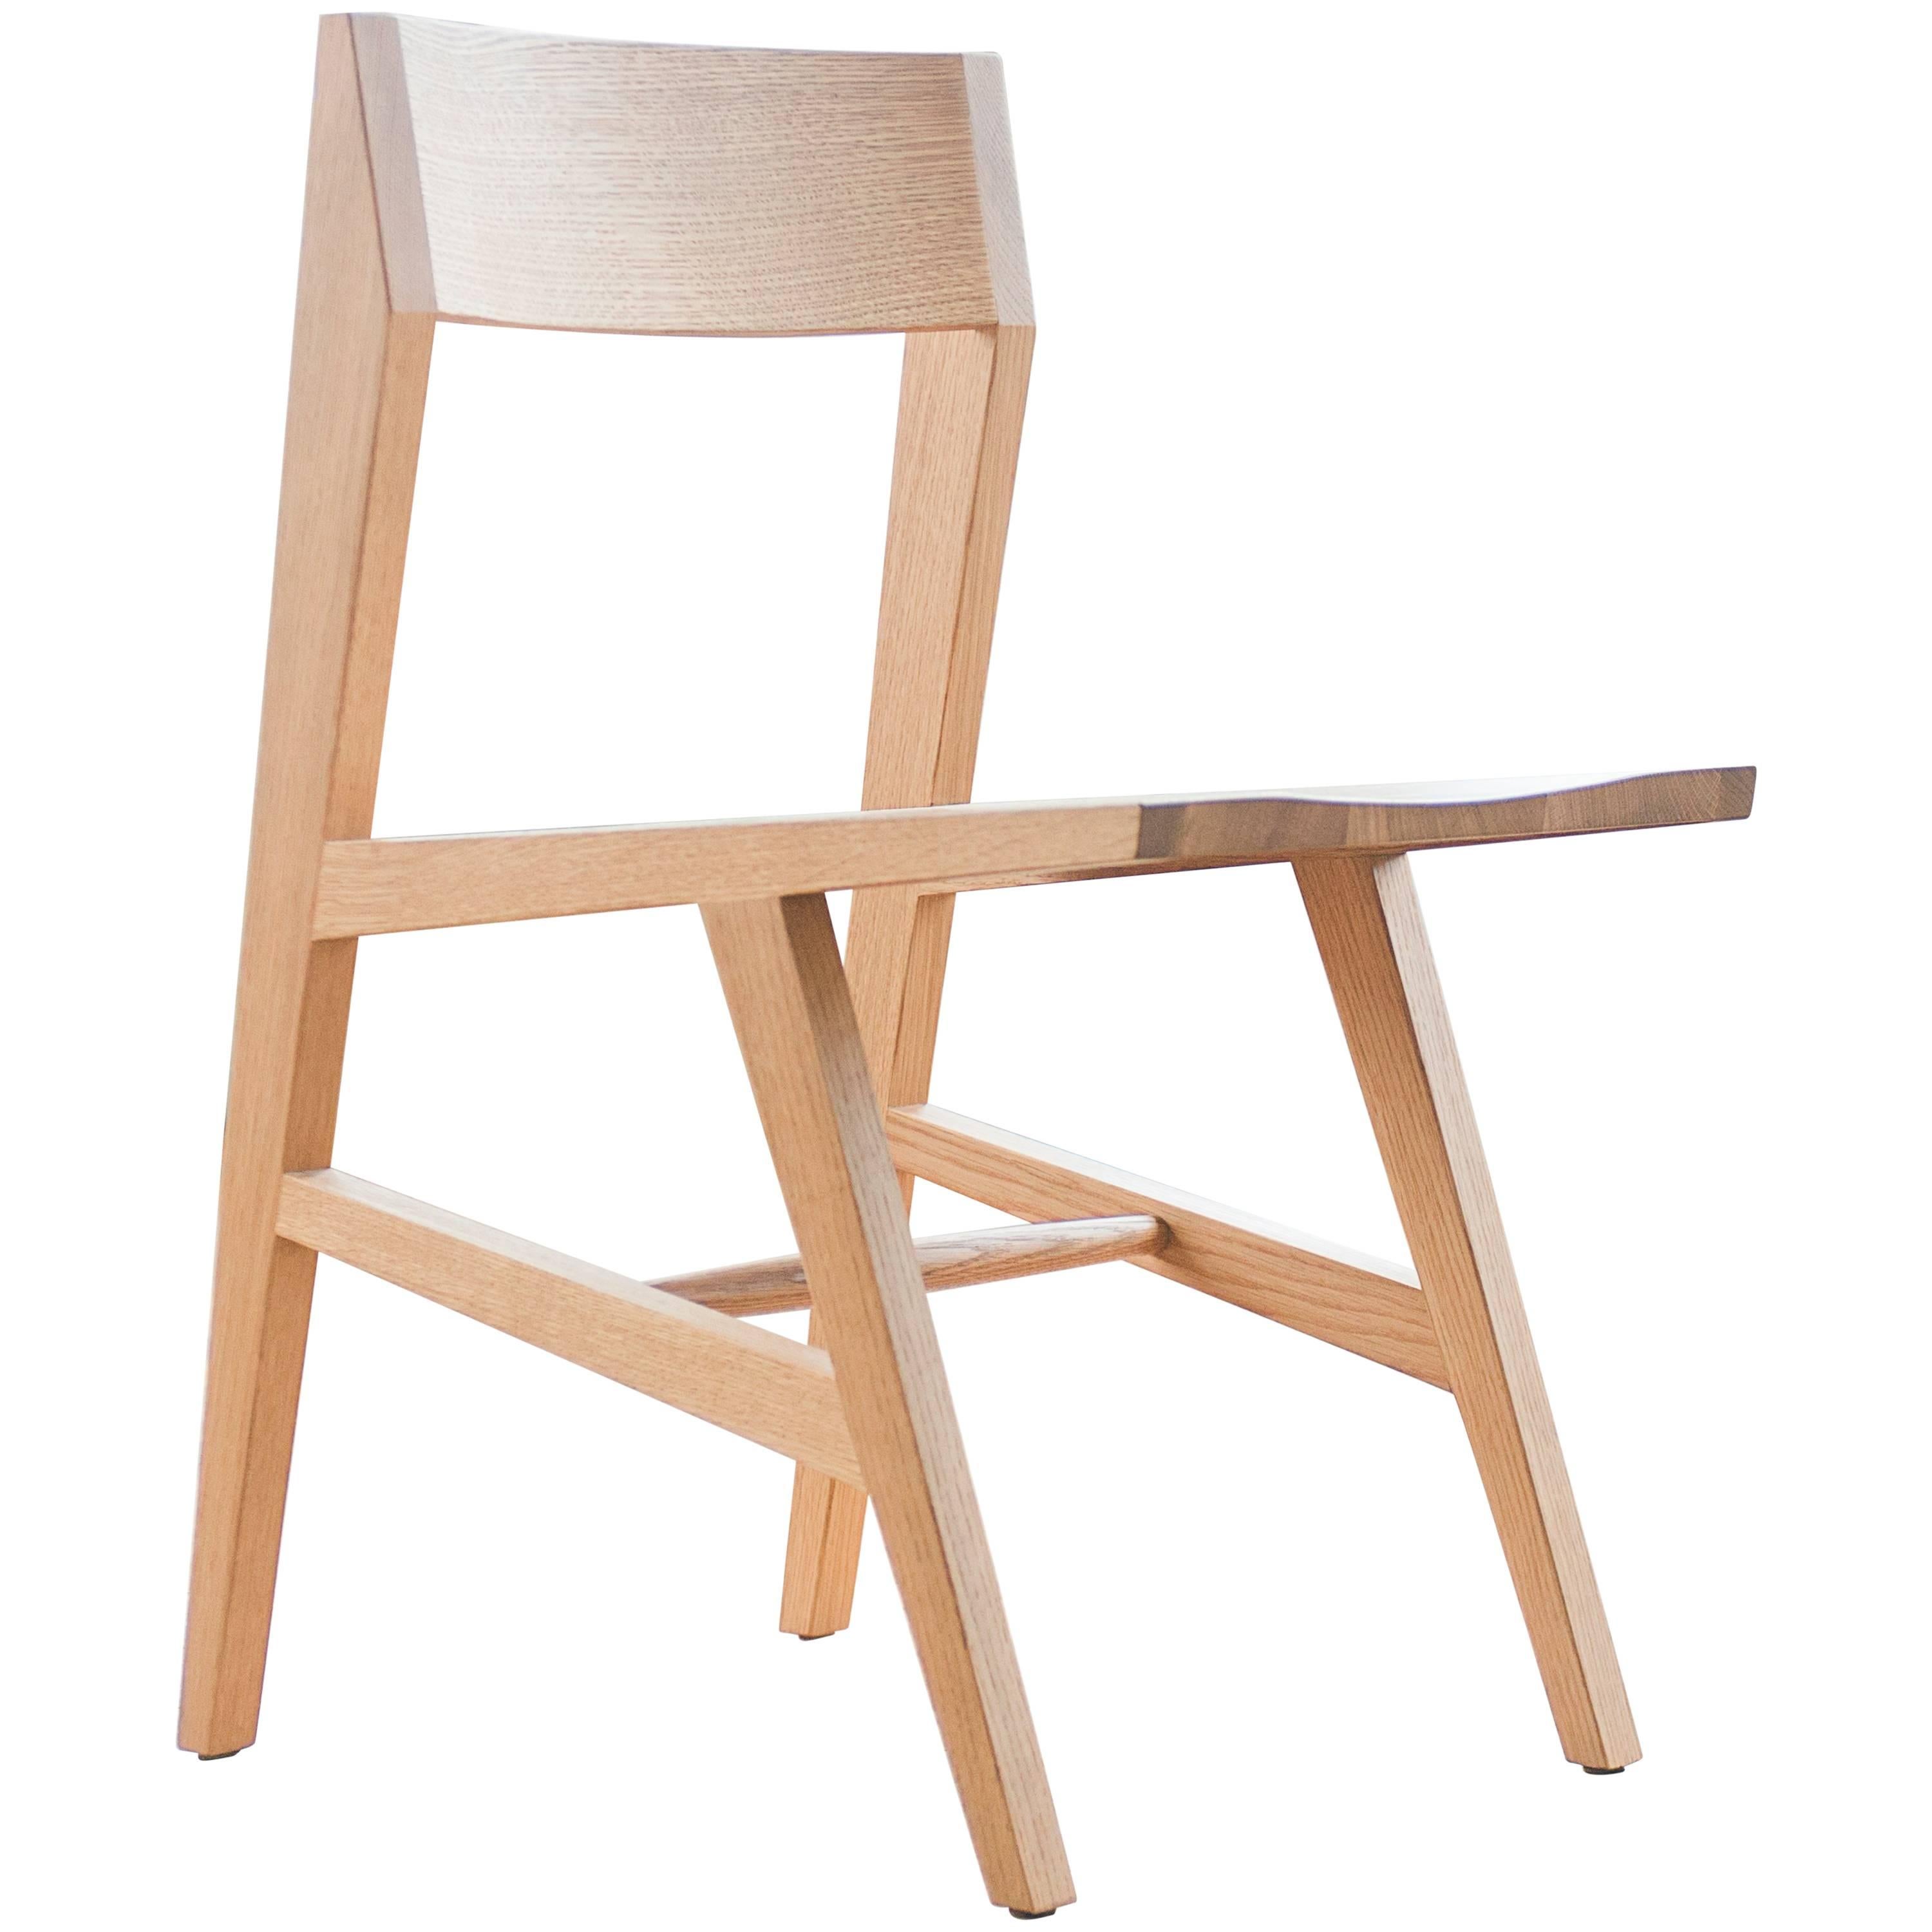 Phloem Studio Jess Side Chair, Modern White Oak Solid Wood Dining Chair